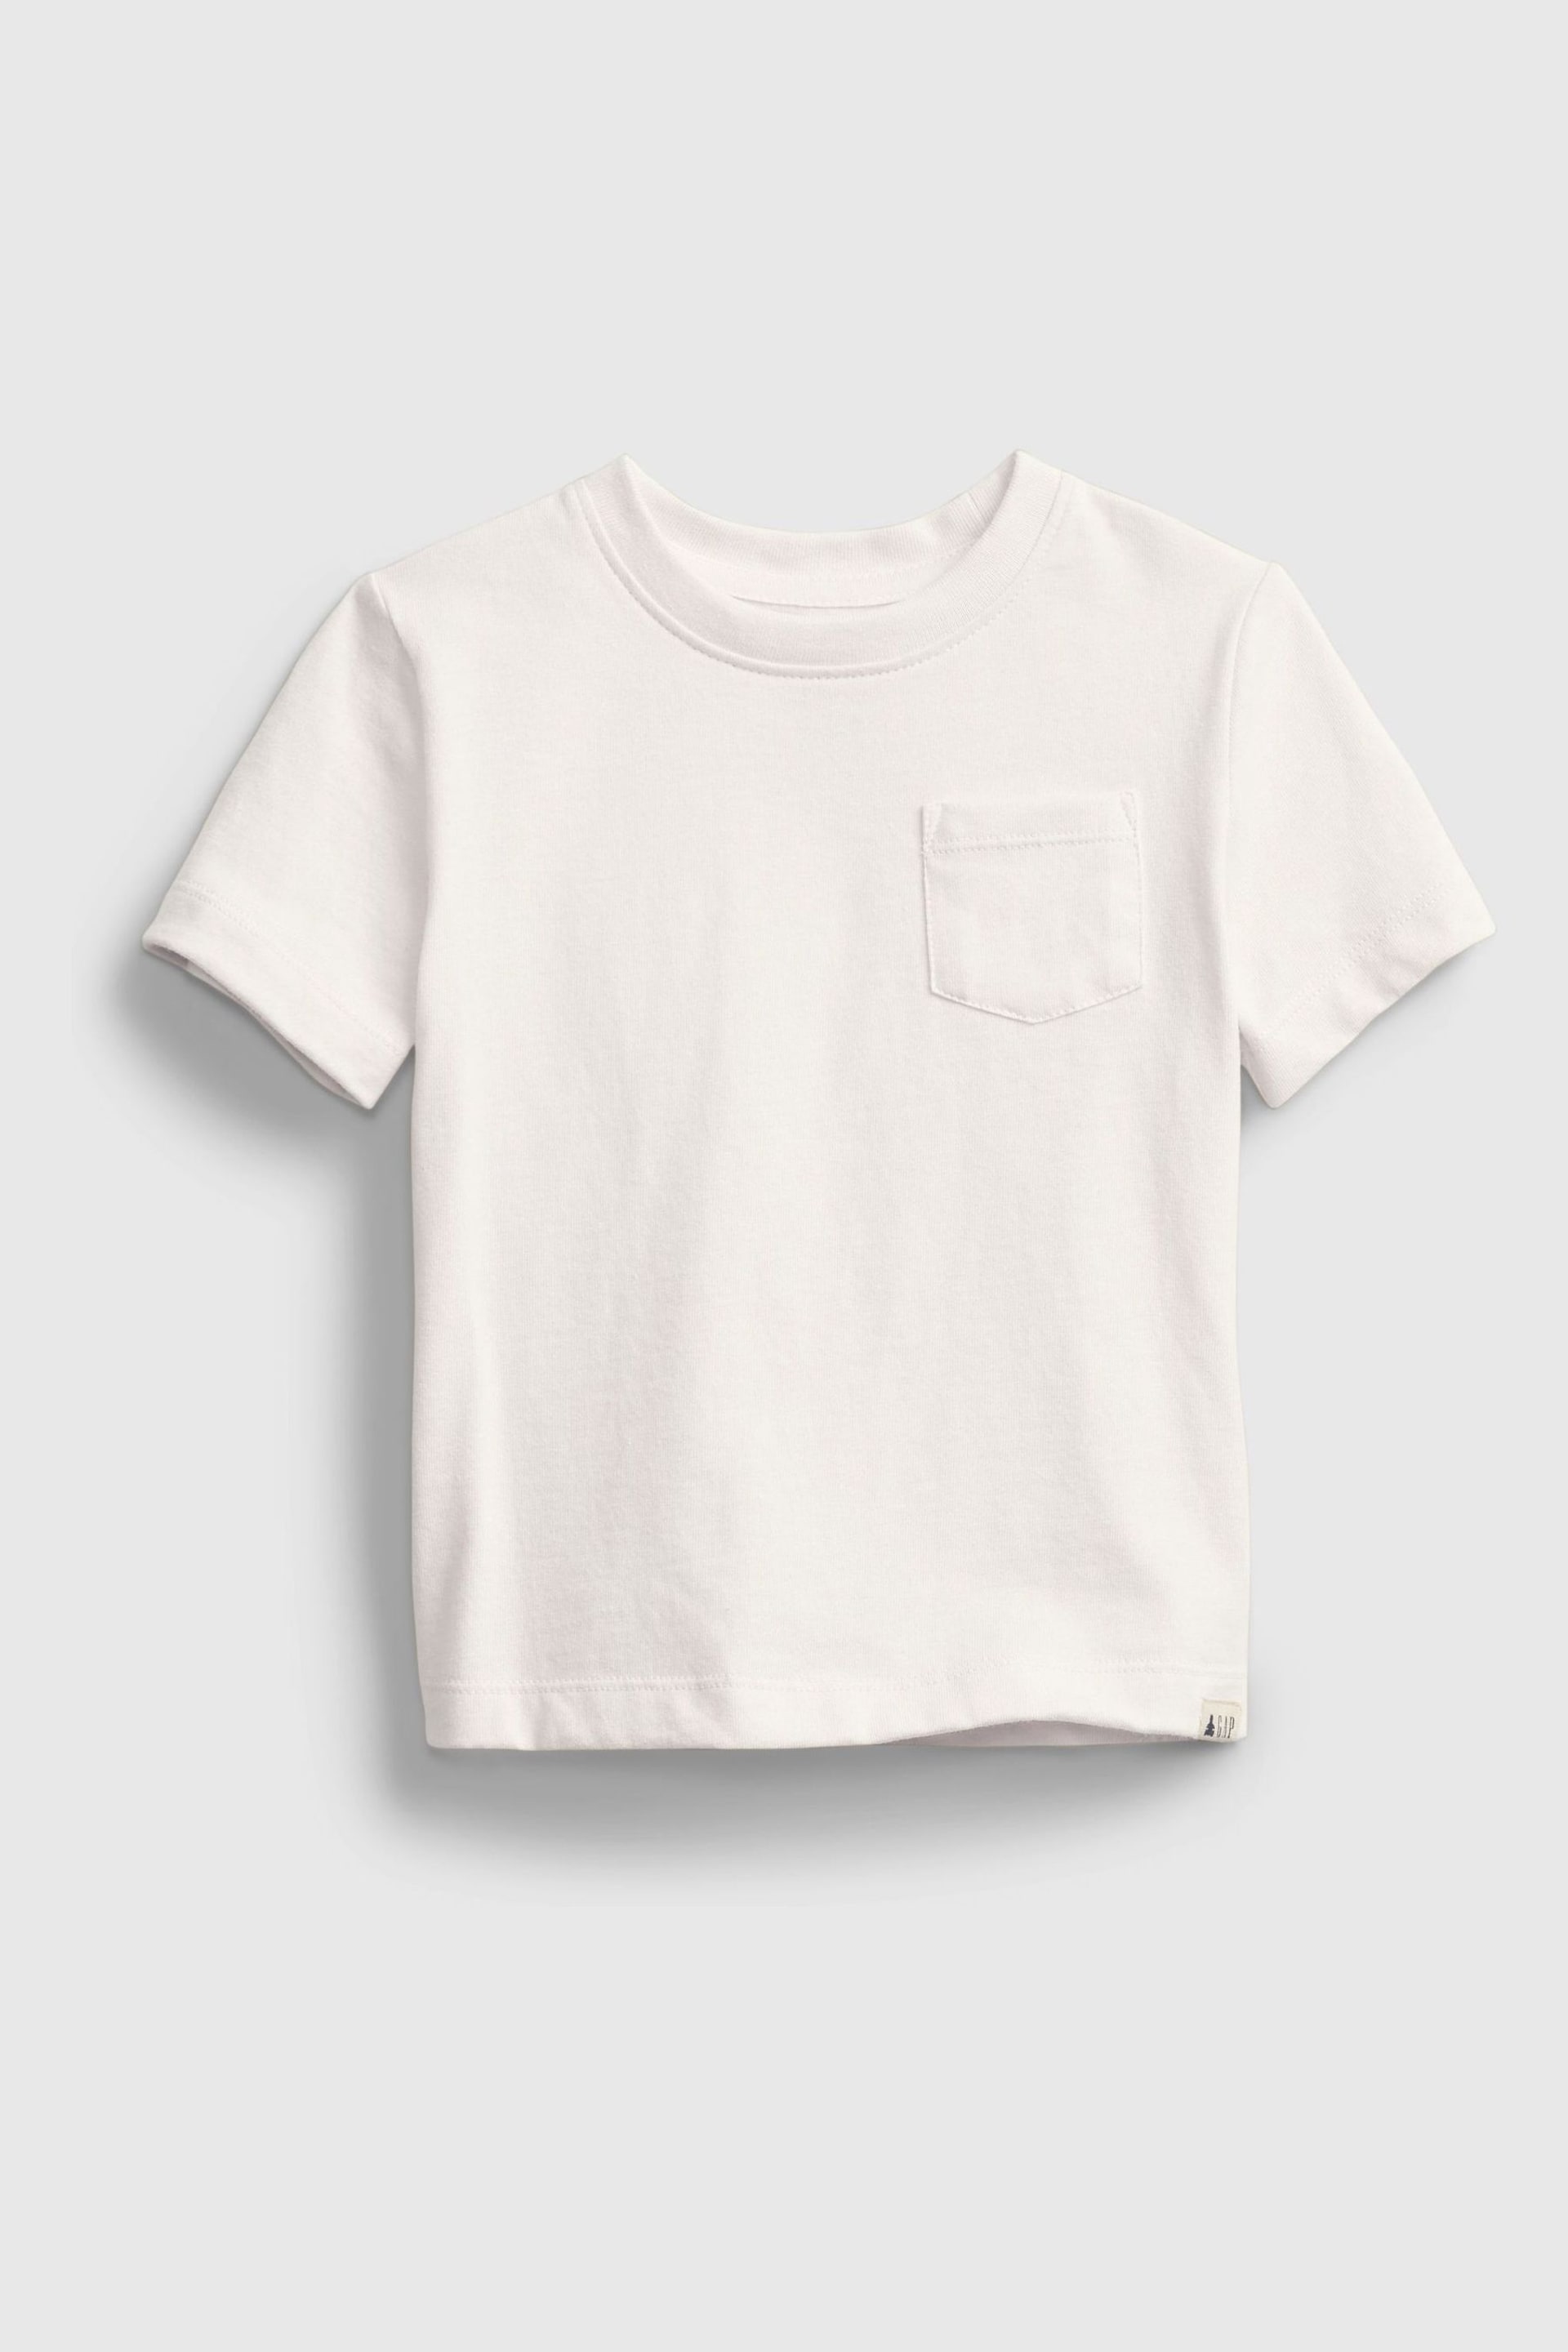 Gap White Pocket Short Sleeve Crew Neck T-Shirt (6mths-5yrs) - Image 1 of 1